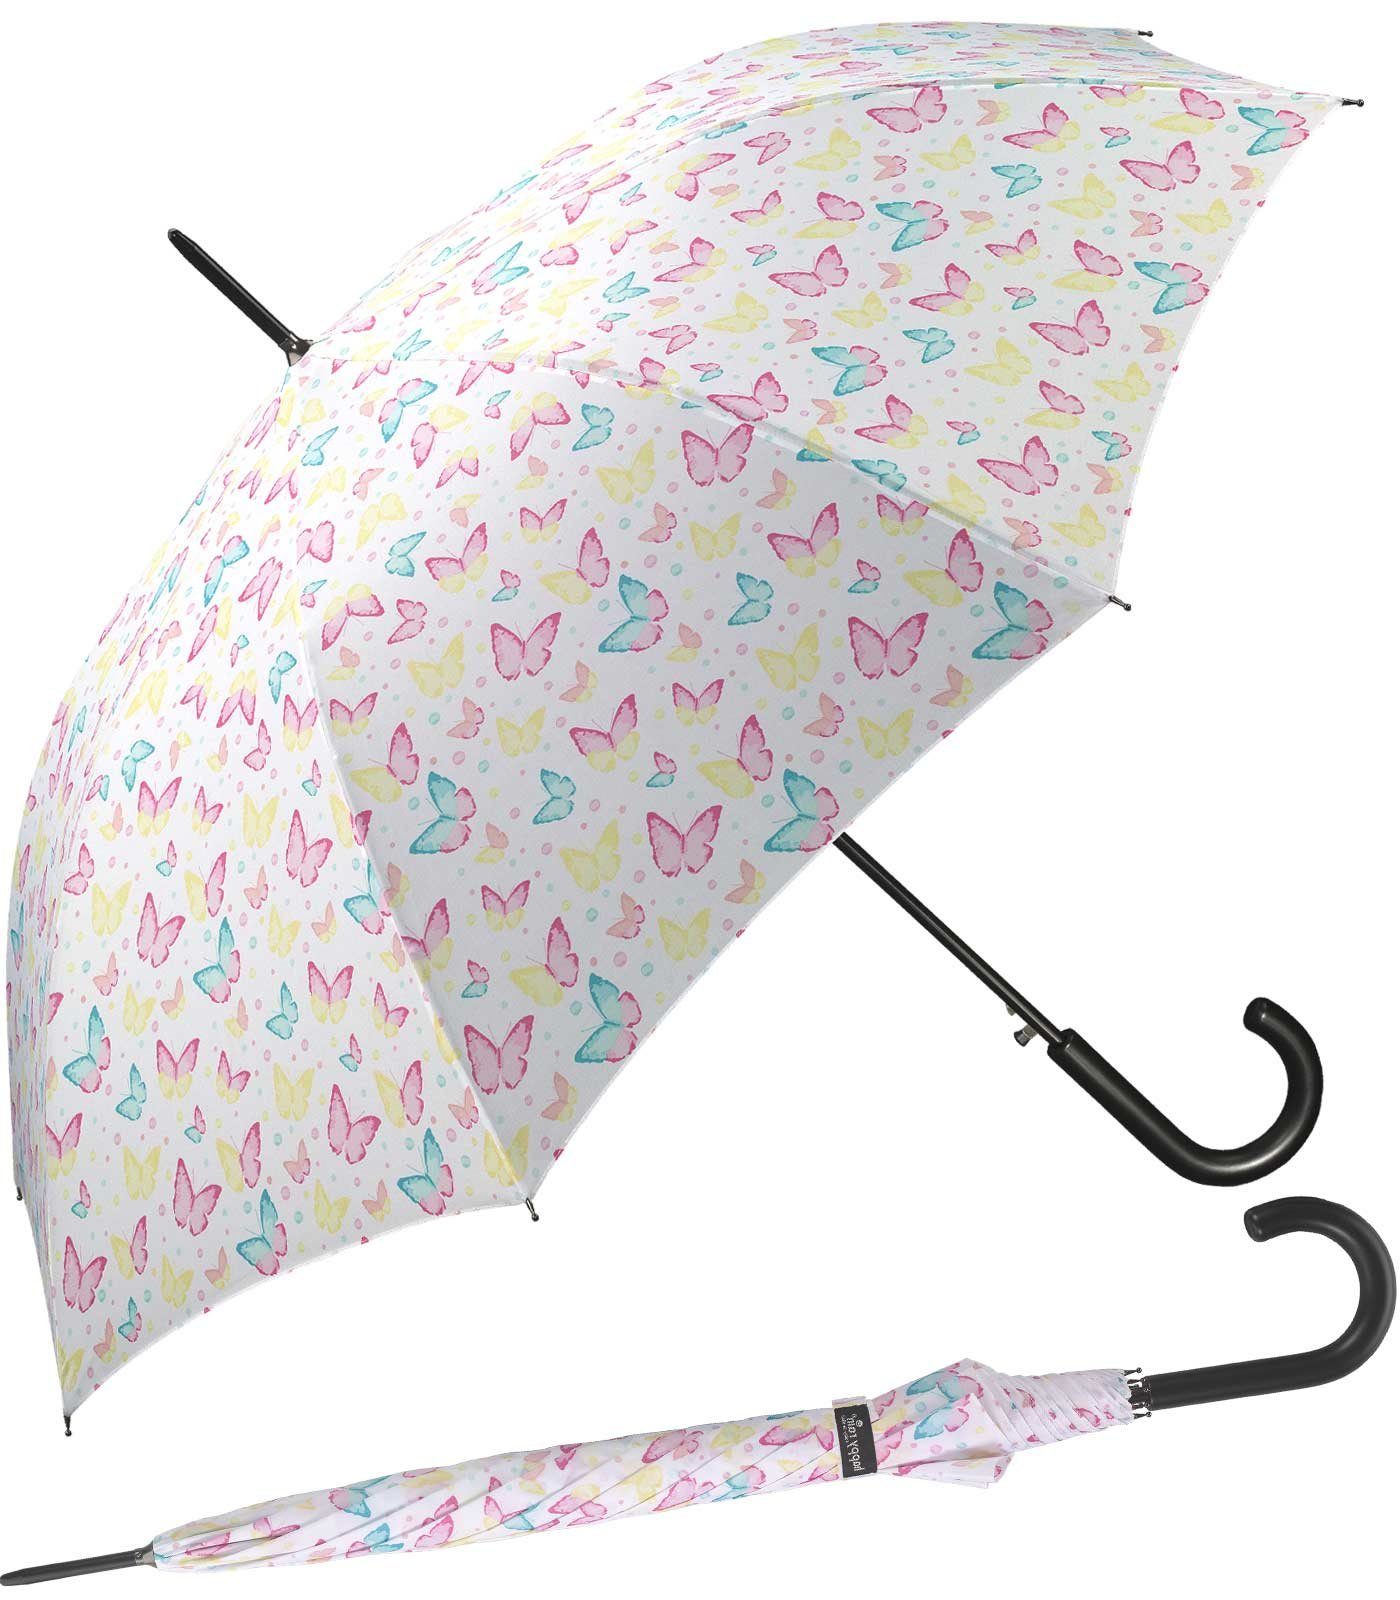 HAPPY RAIN Langregenschirm großer Damen-Regenschirm mit Auf-Automatik, zauberhafte Schmetterlinge in zarten Pastellfarben